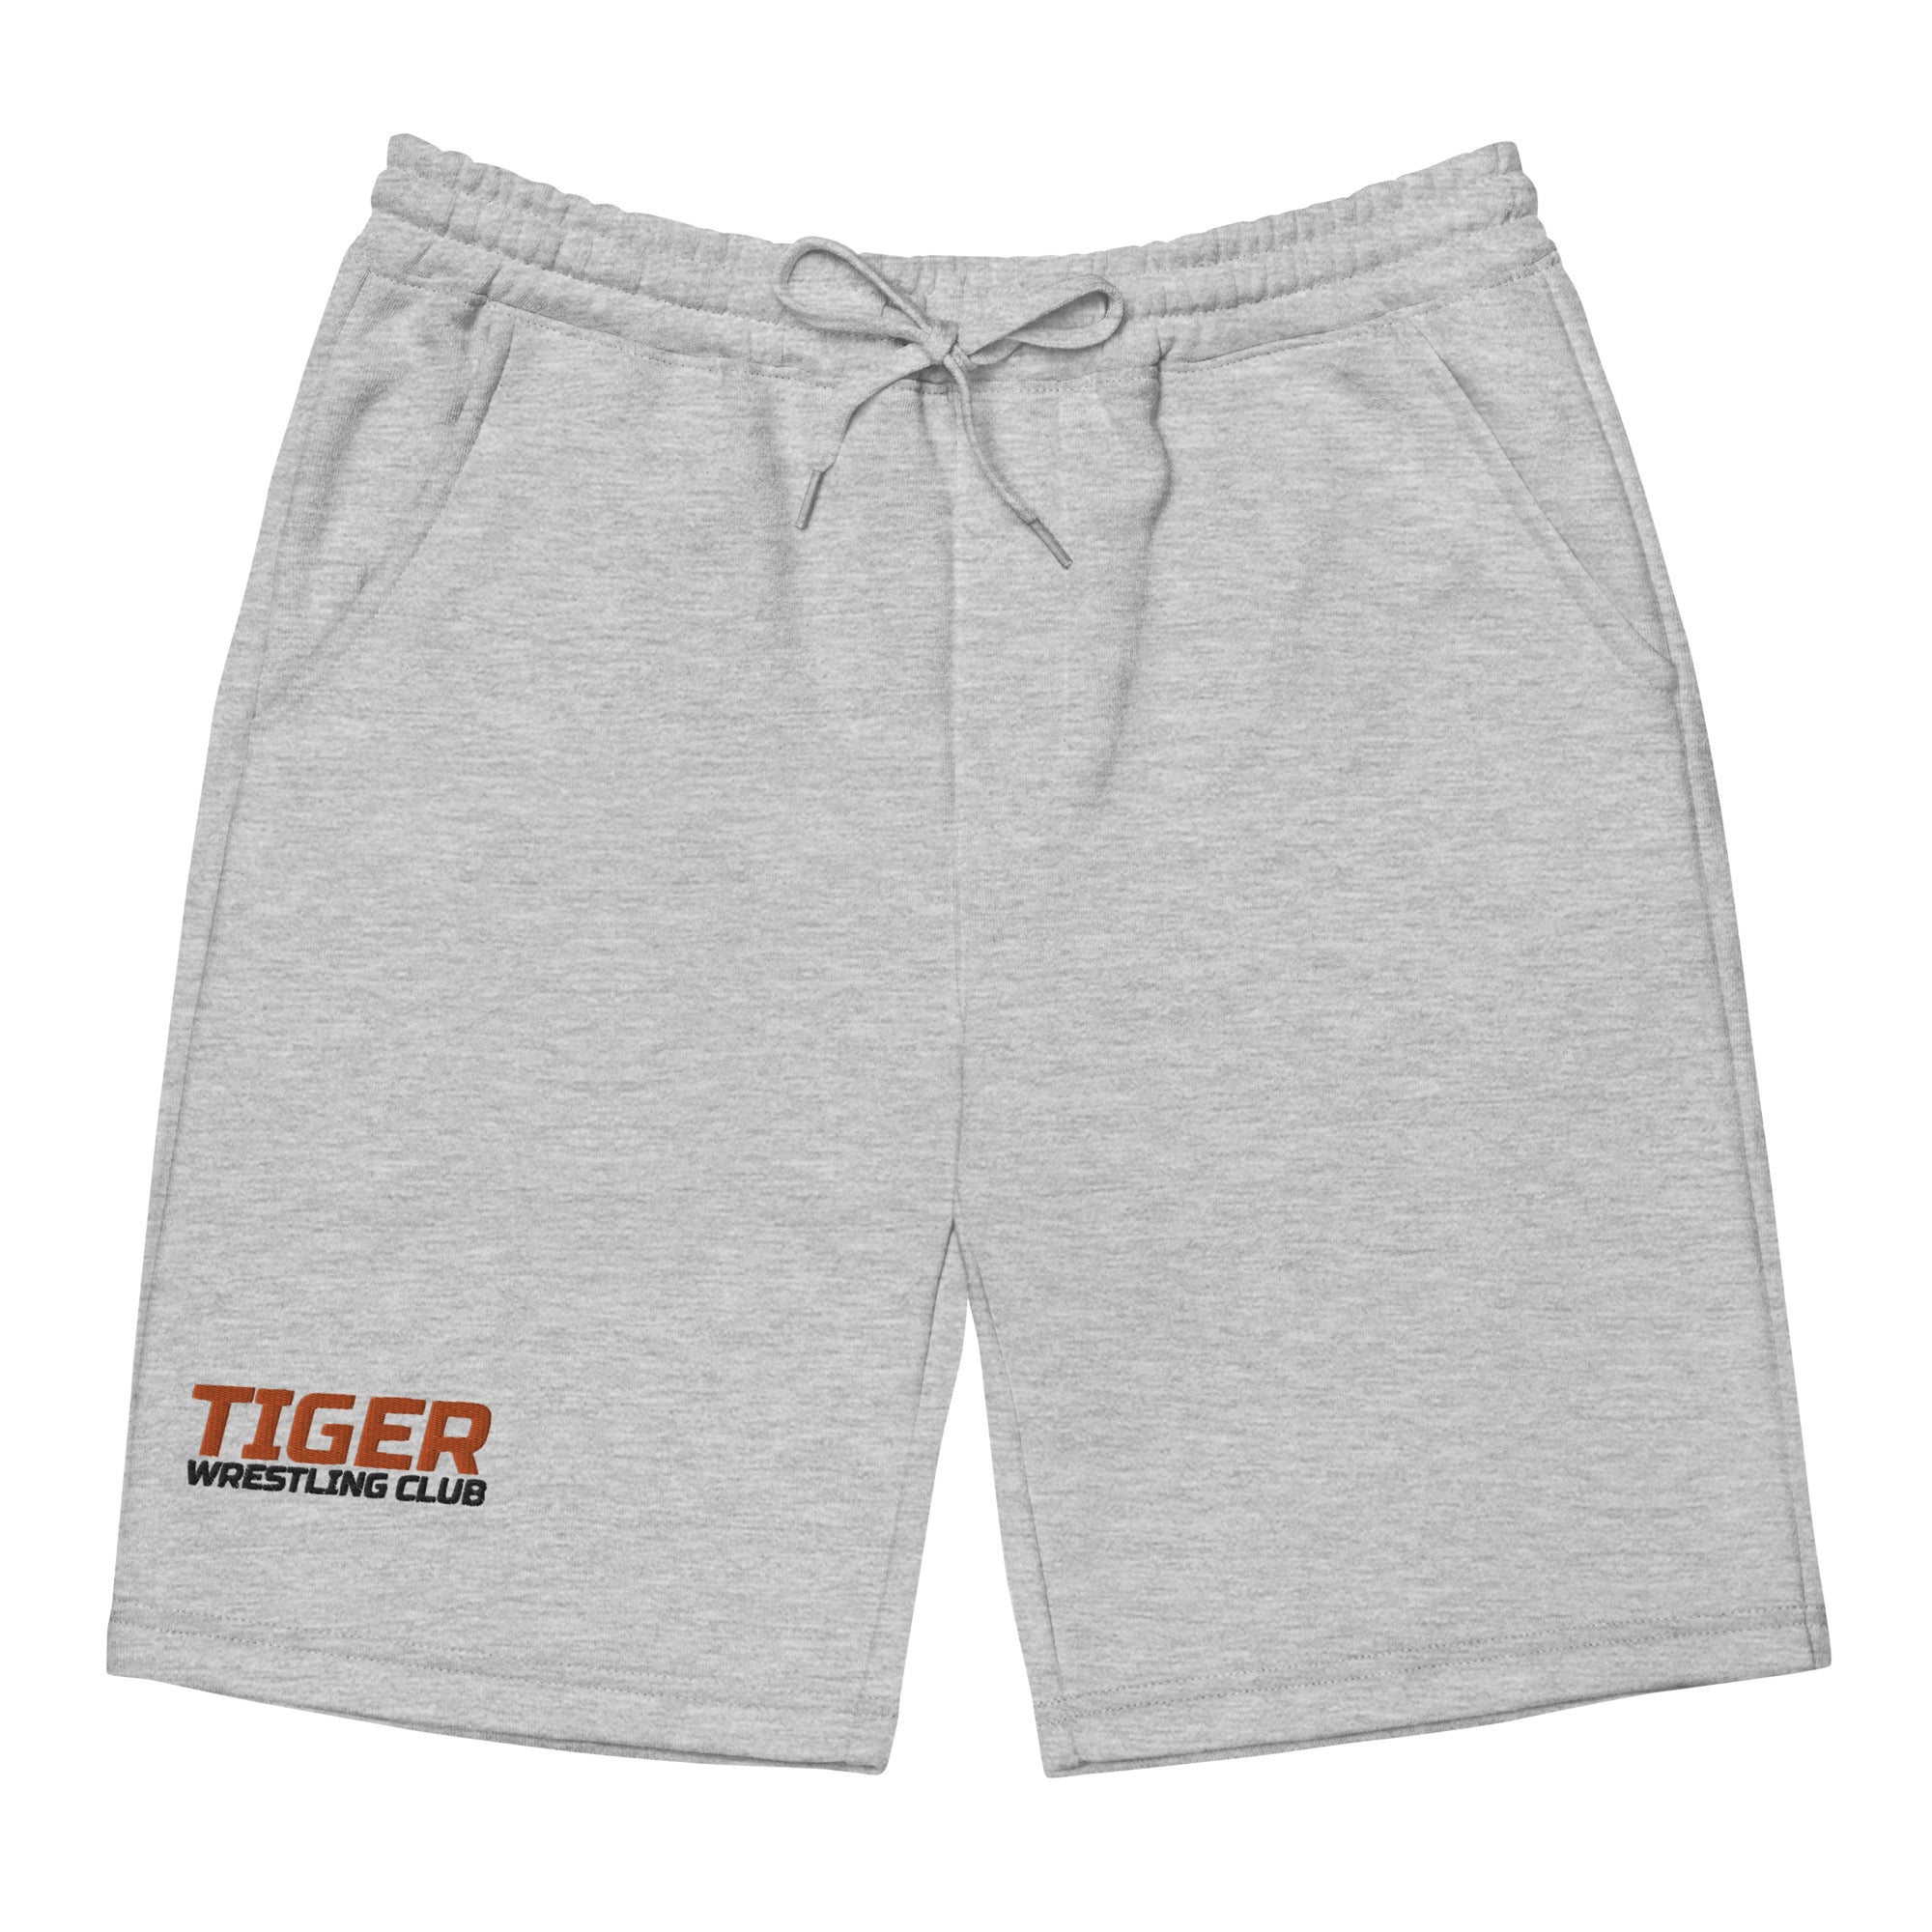 Tiger Wrestling Club Mens Fleece Shorts